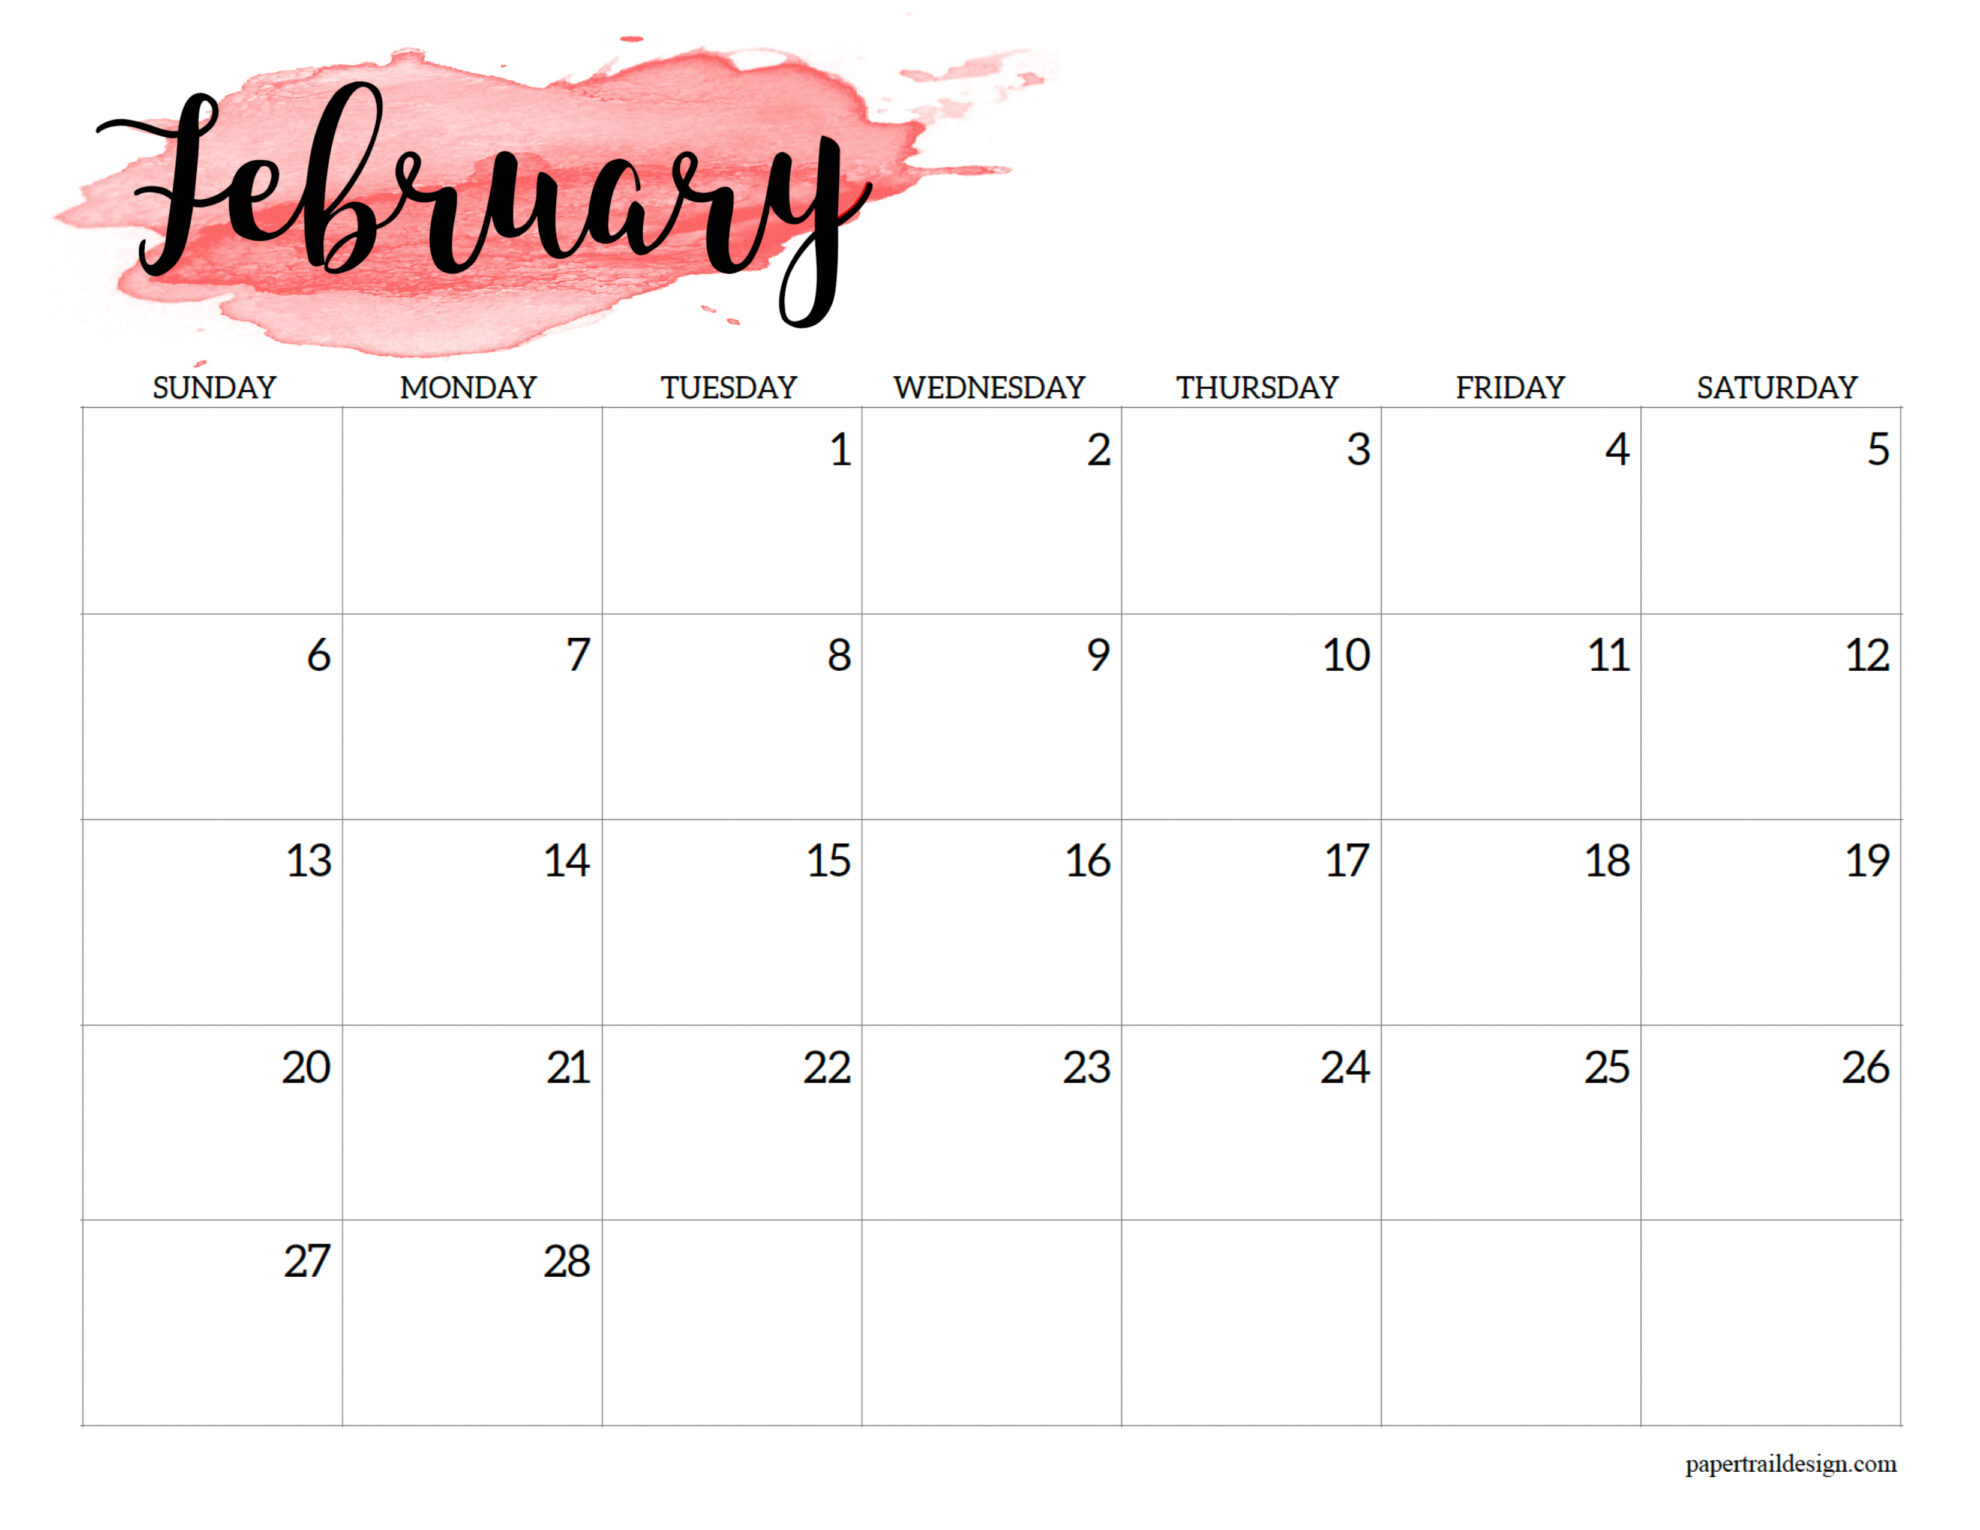 February 2022 Calendar Printable 2022 Calendar Printable - Watercolor - Paper Trail Design